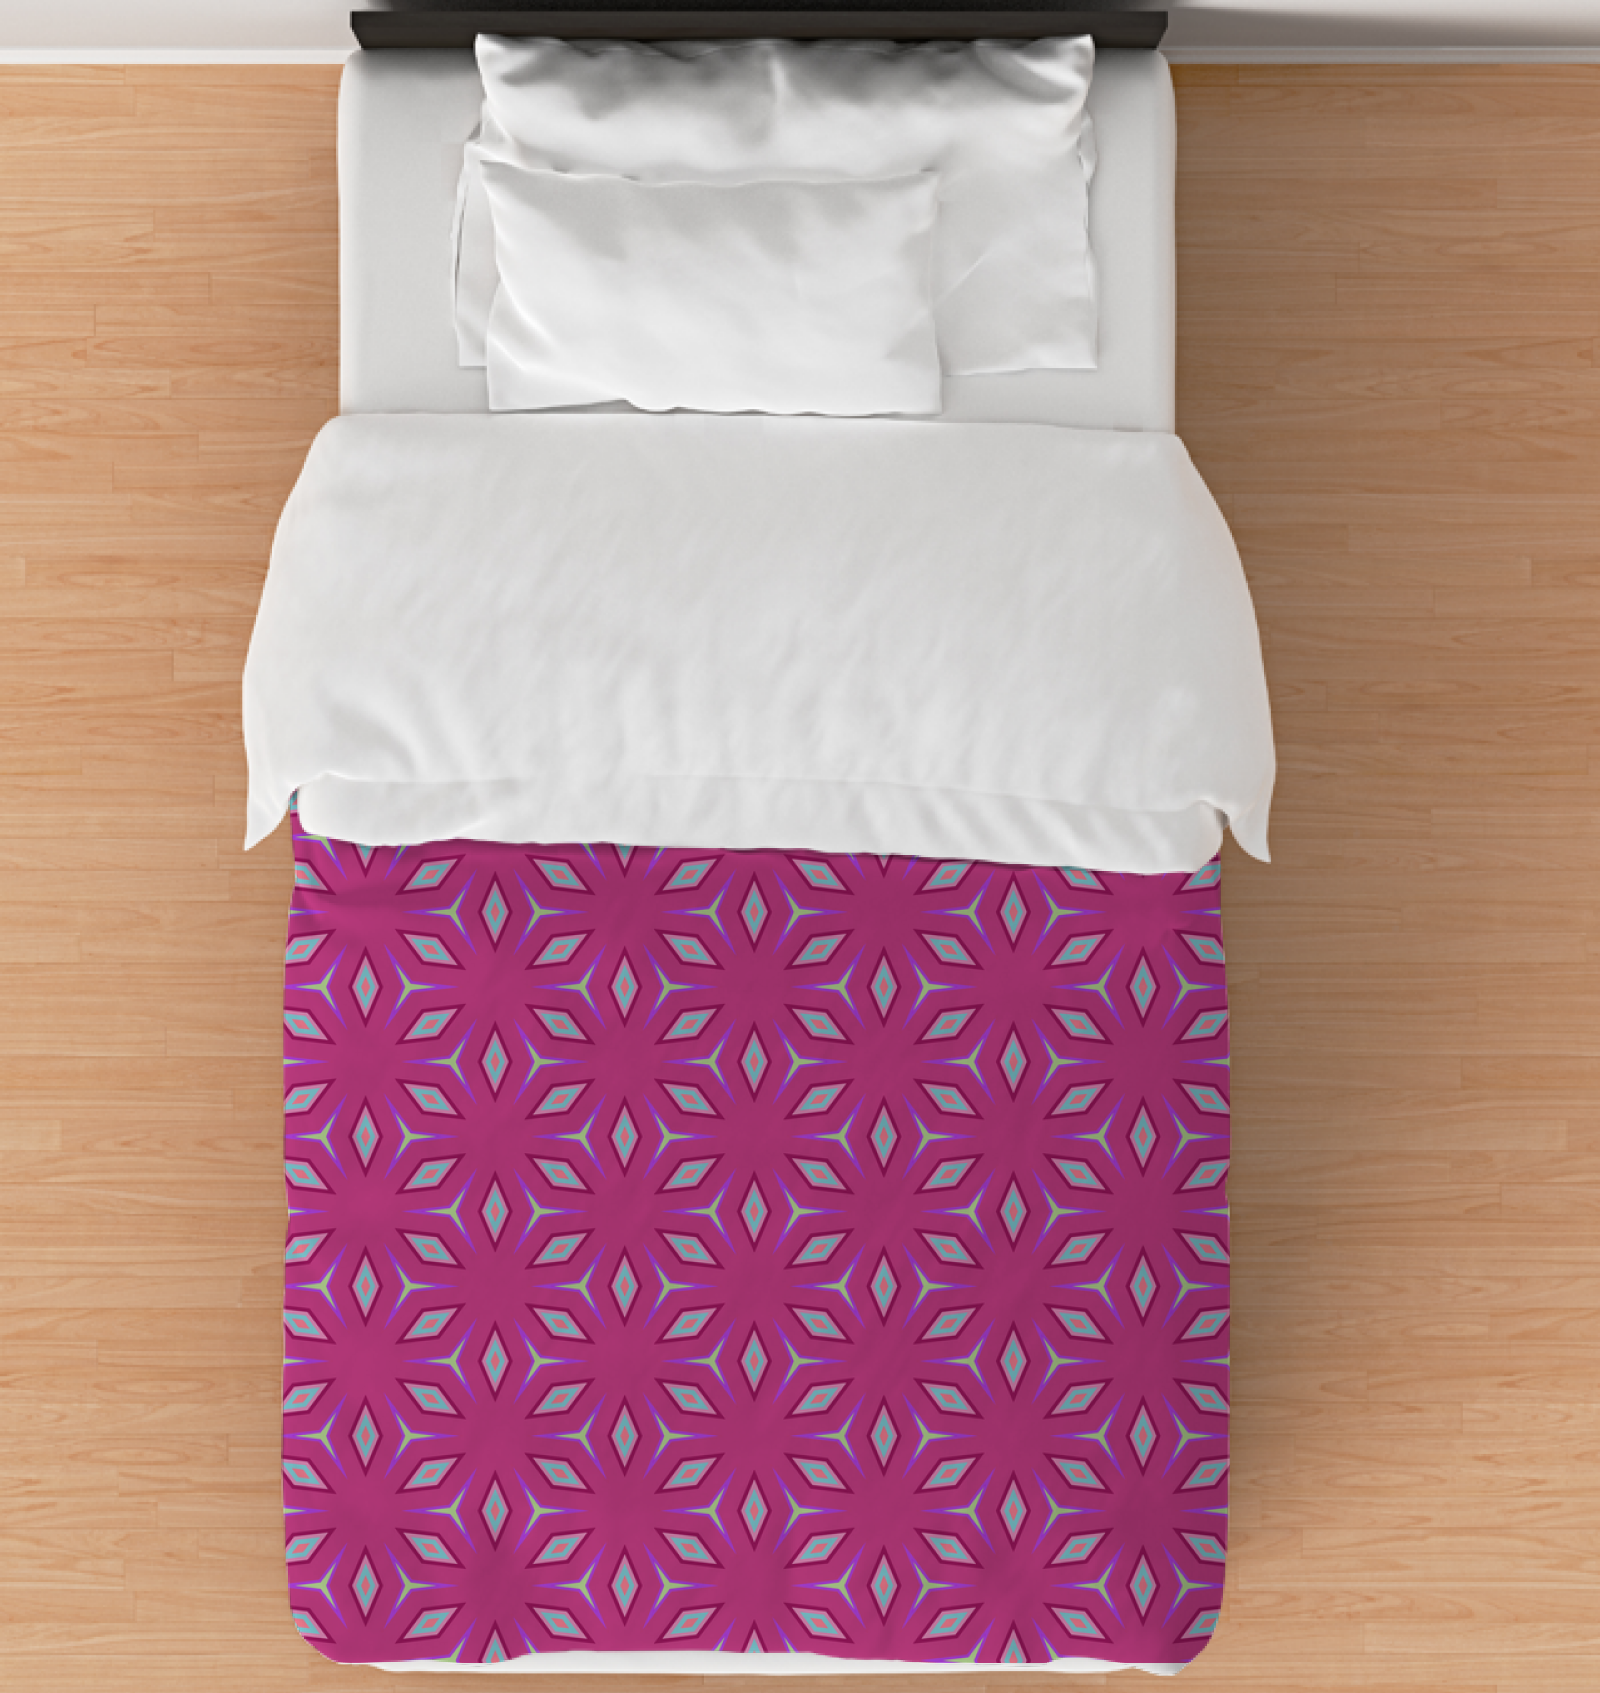 Mandala Magic Duvet Cover on a neatly made bed